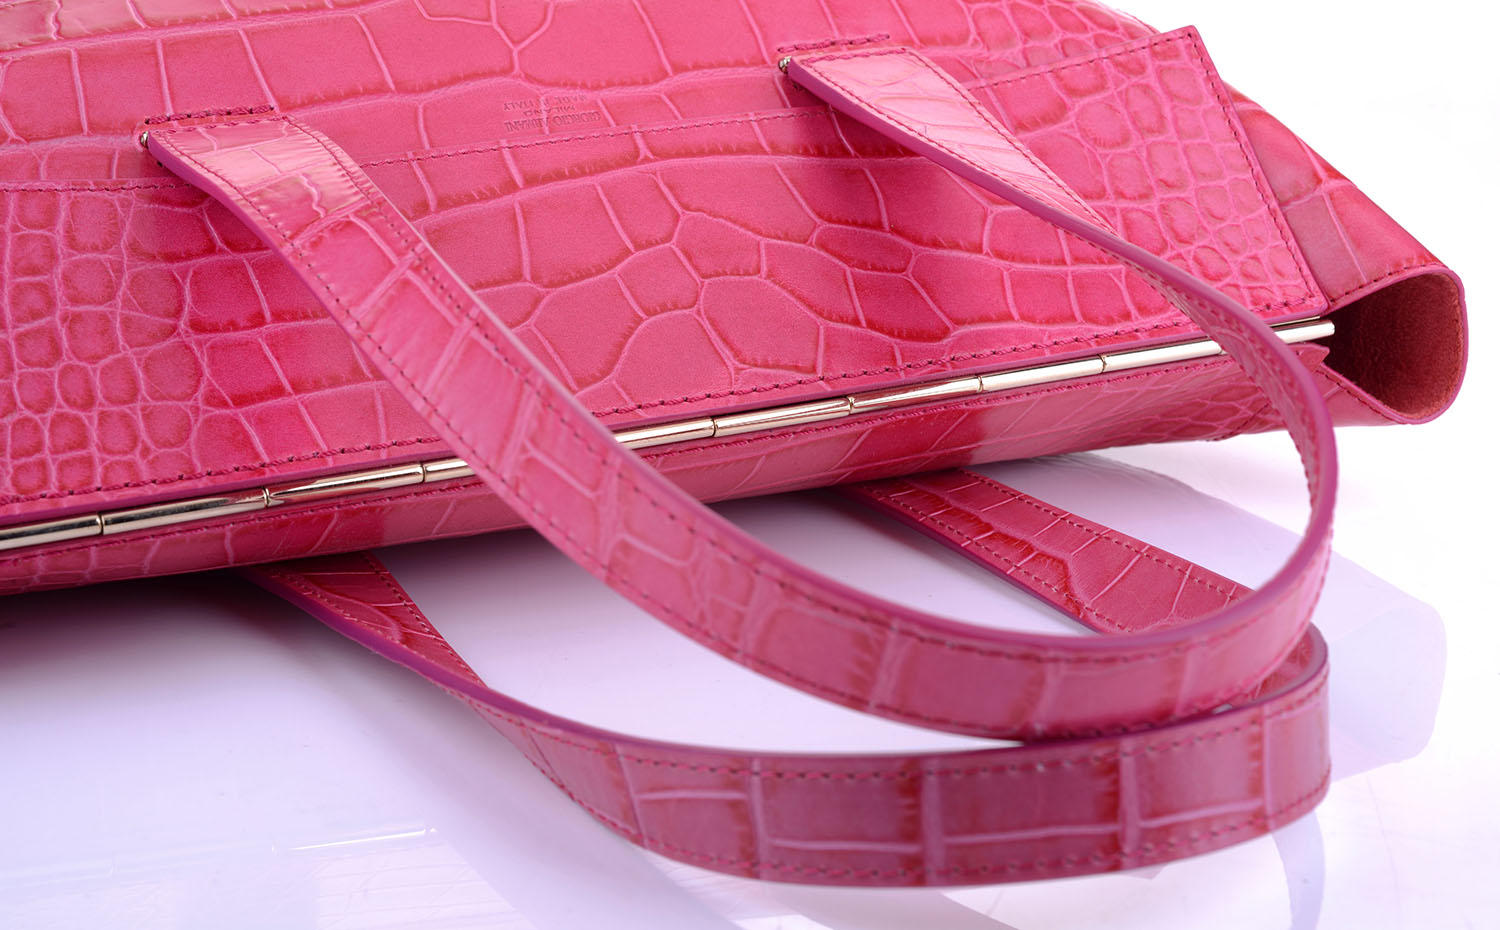 Armarni: Giorgio Armani Mock Croc Shopper bag with a zip around wallet